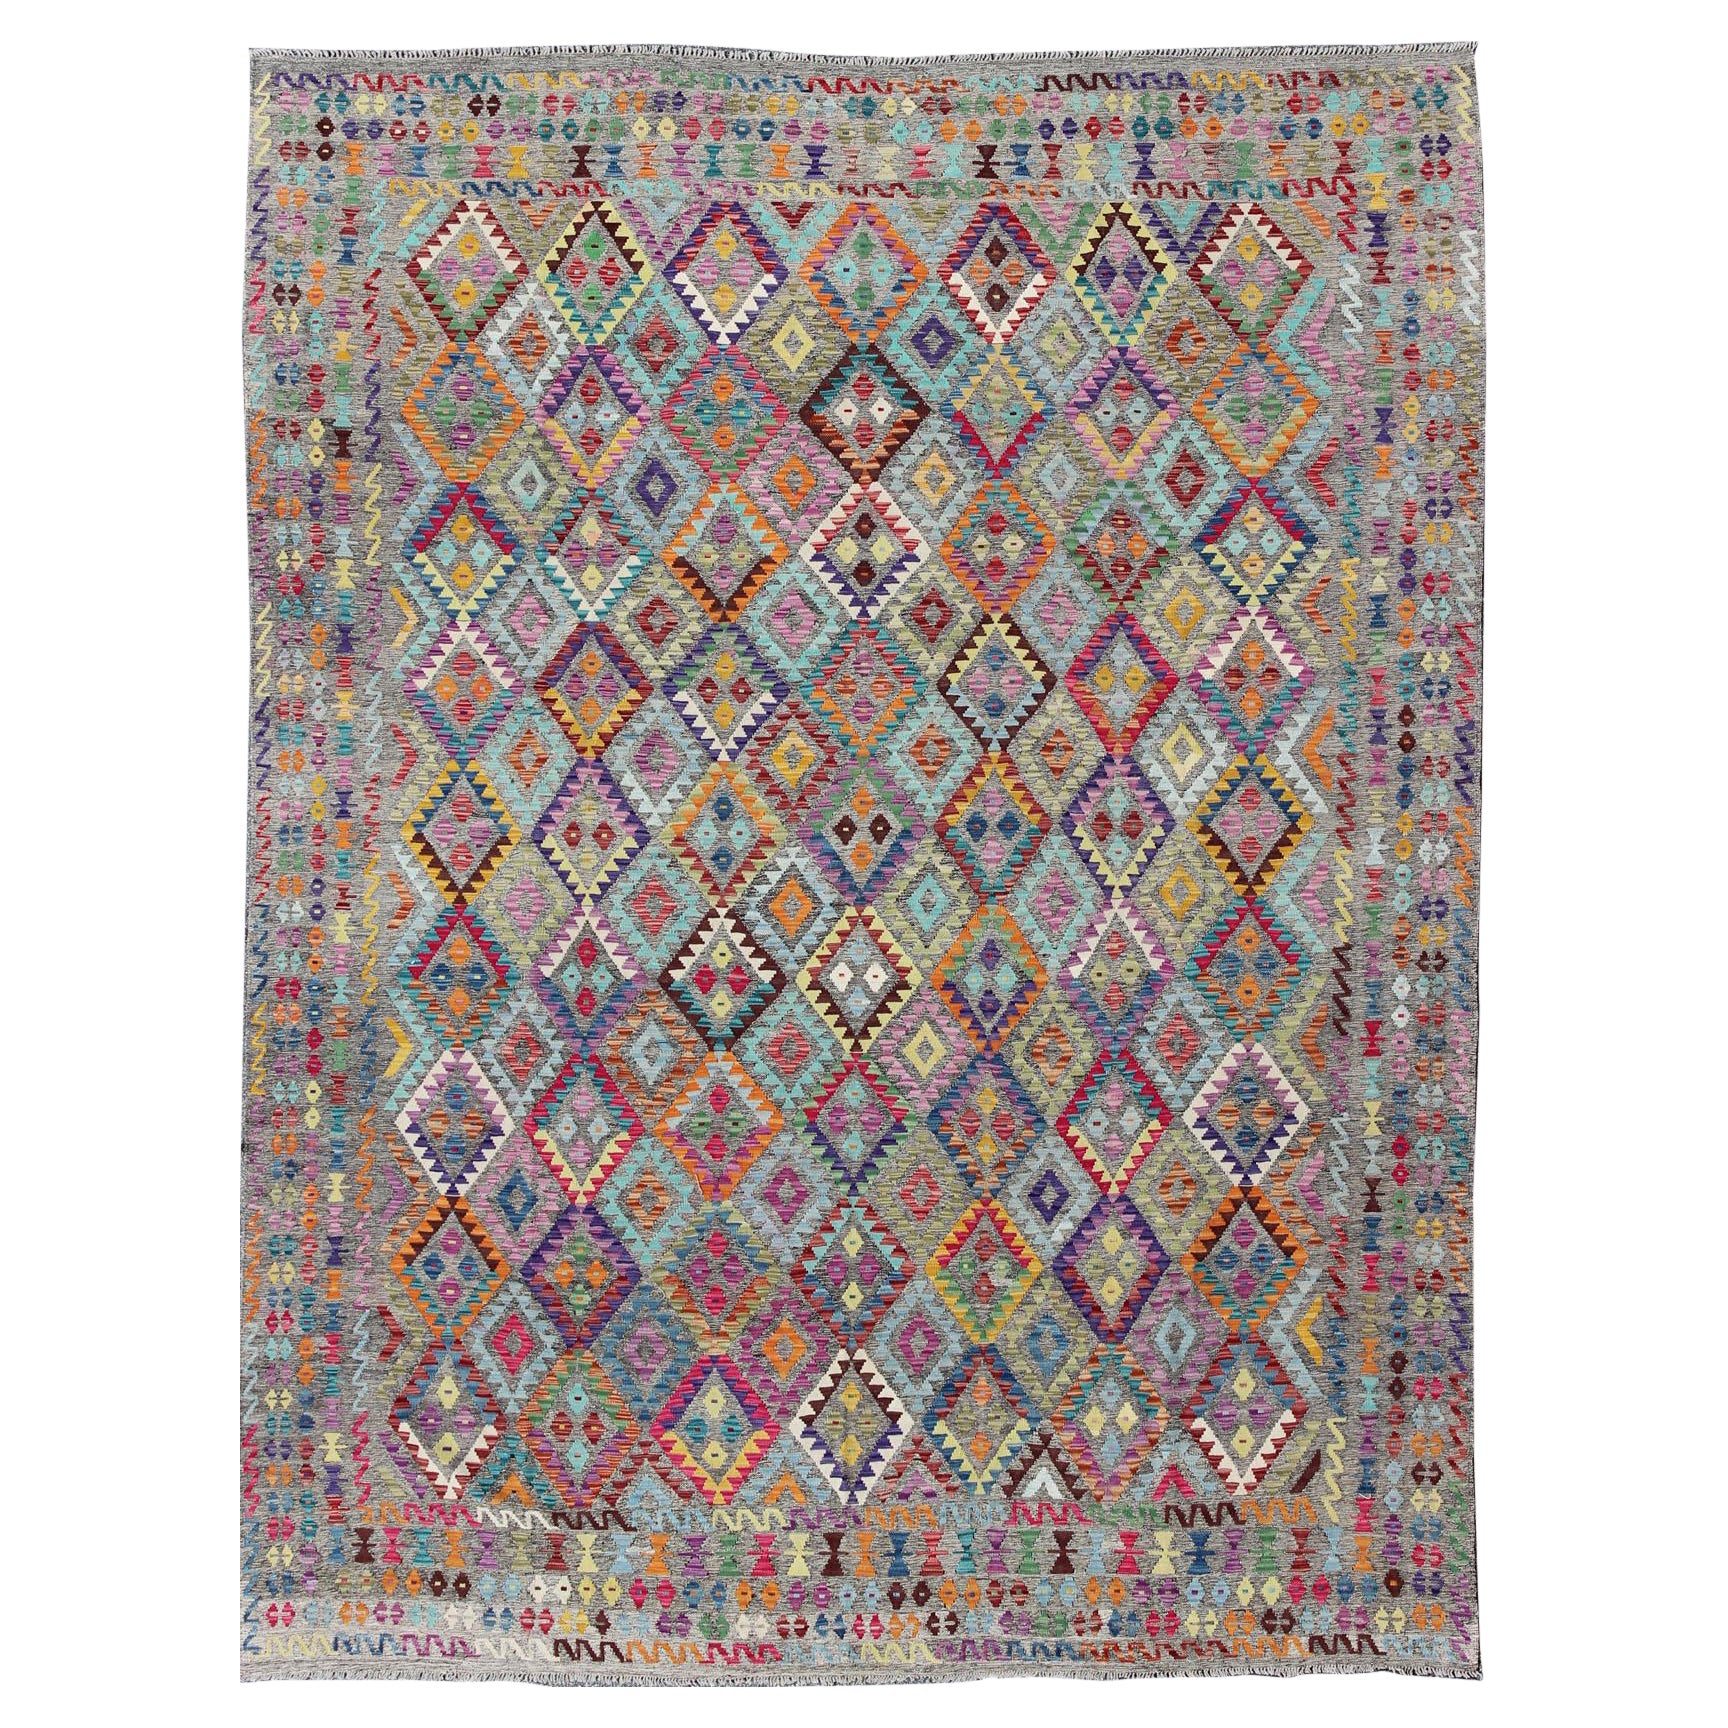 Colorful 21st Century Afghan Kilim Flat Weave Rug in Diamond Design